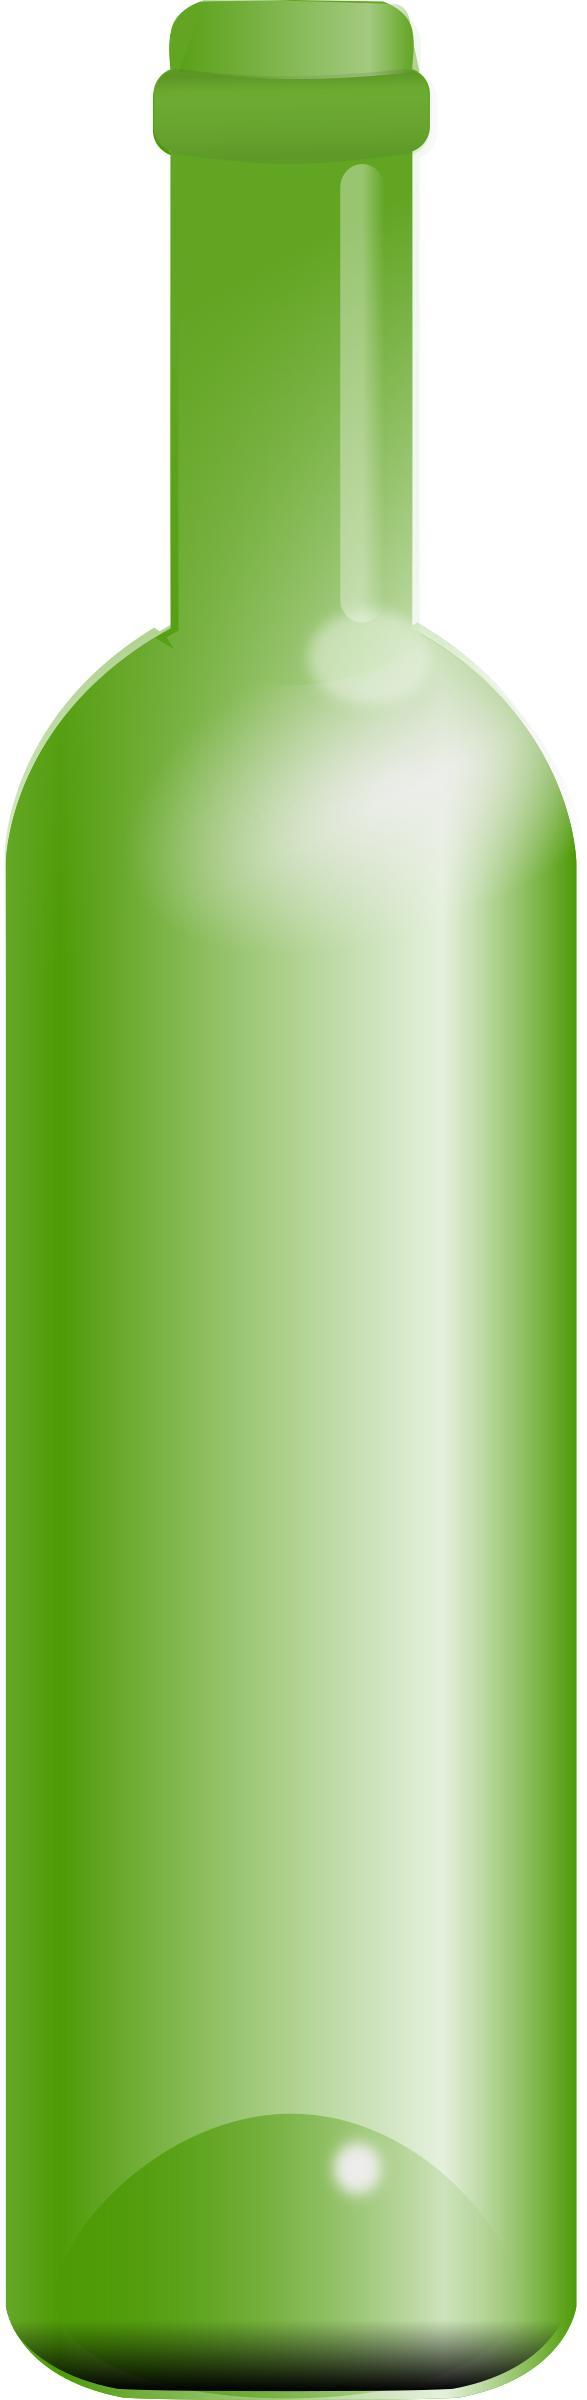 empty green bottle png transparent